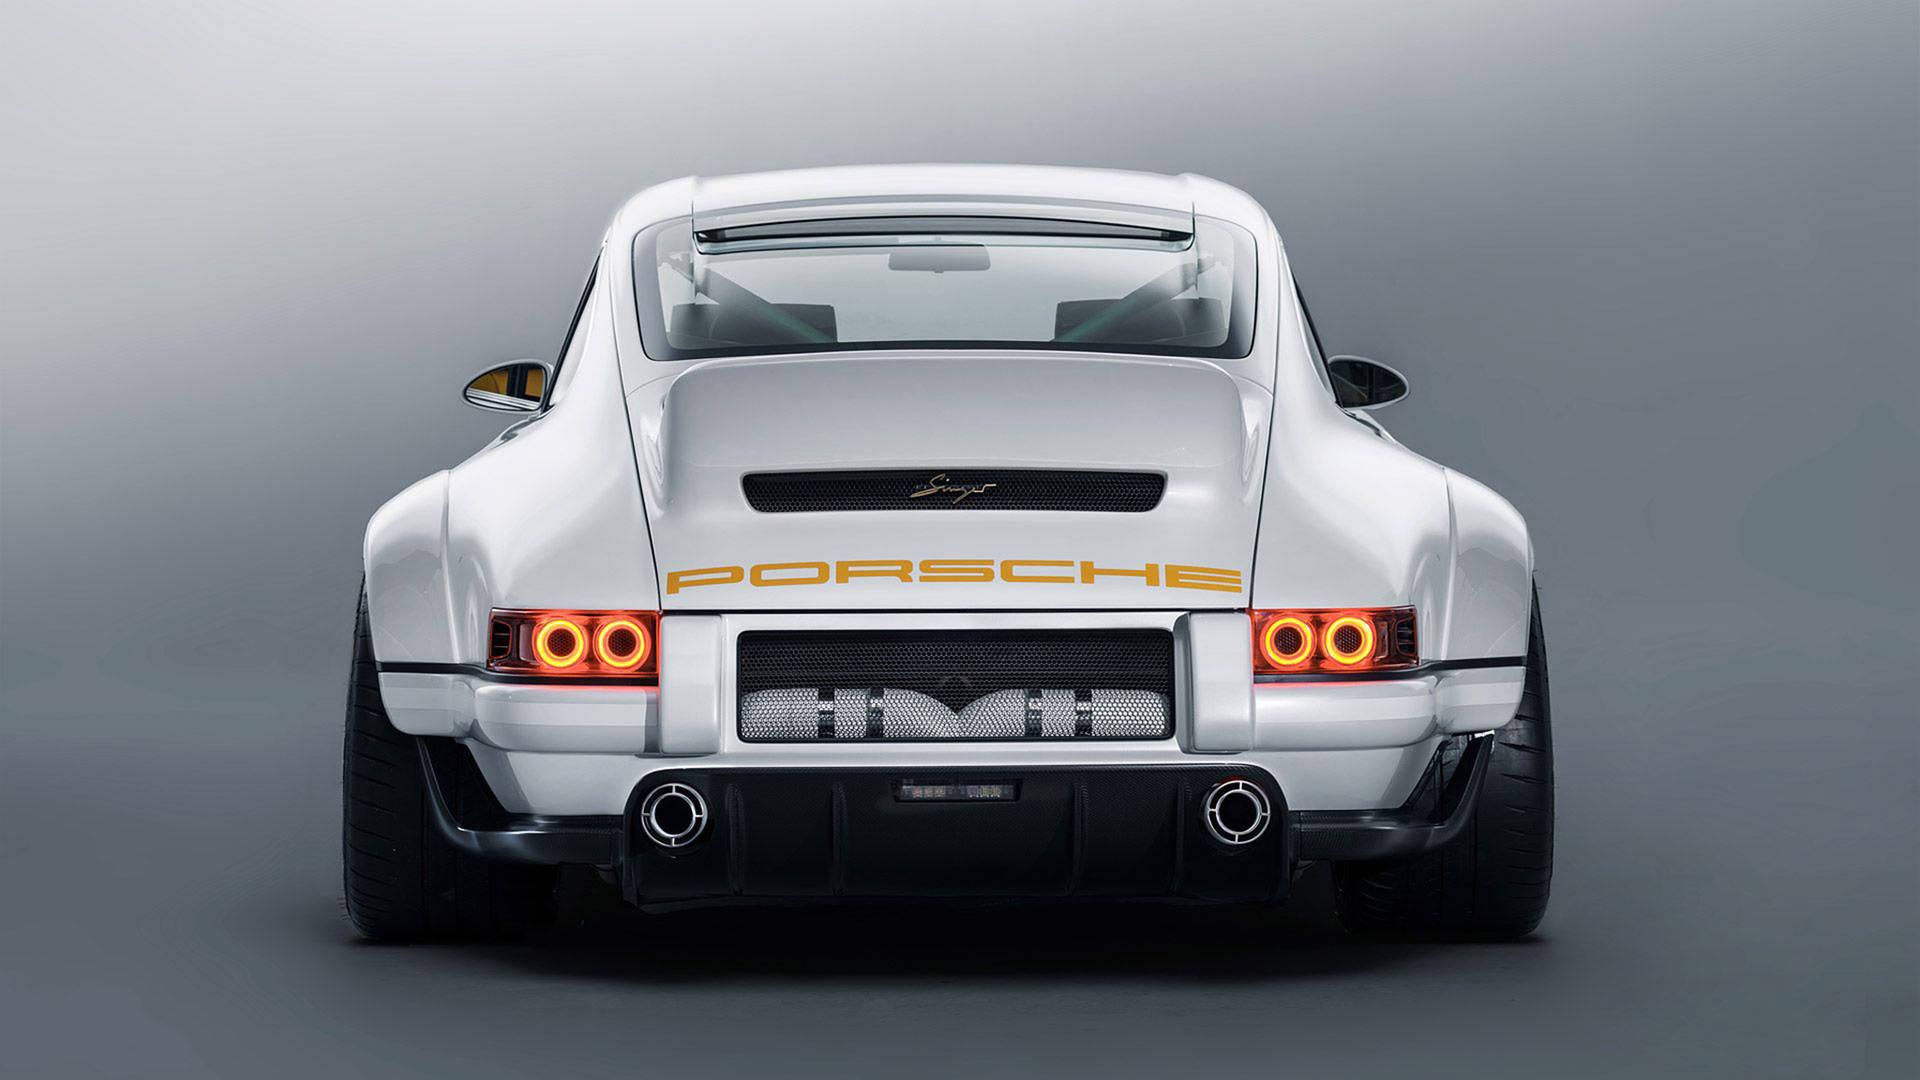 Exquisite Rear View of a White Singer Porsche Wallpaper